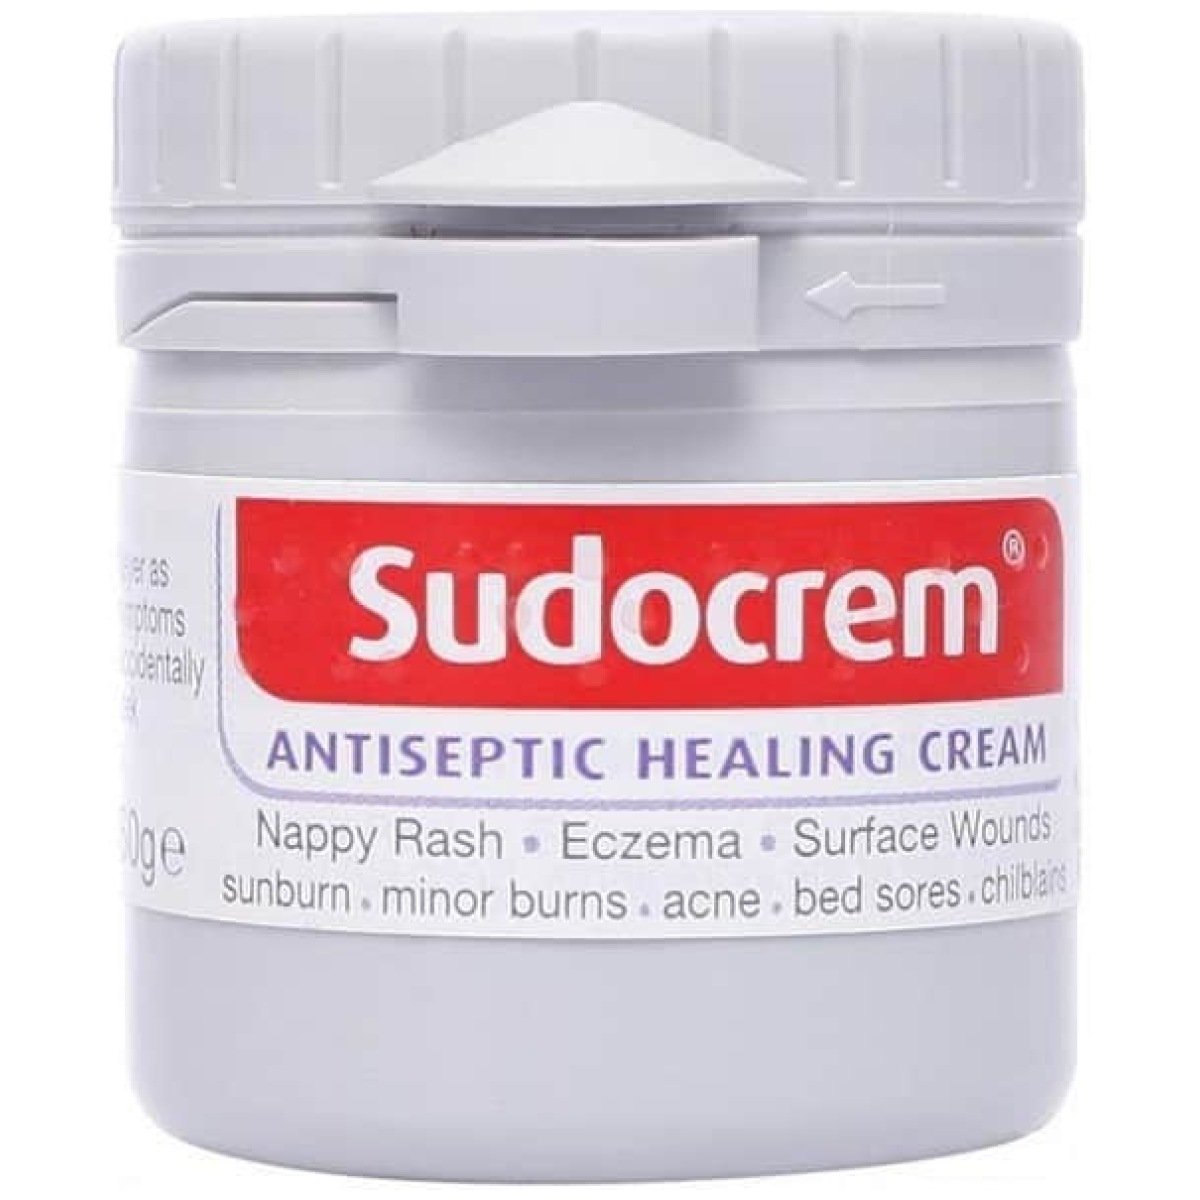 SUDOCREM Antiseptic Healing Cream 60gms